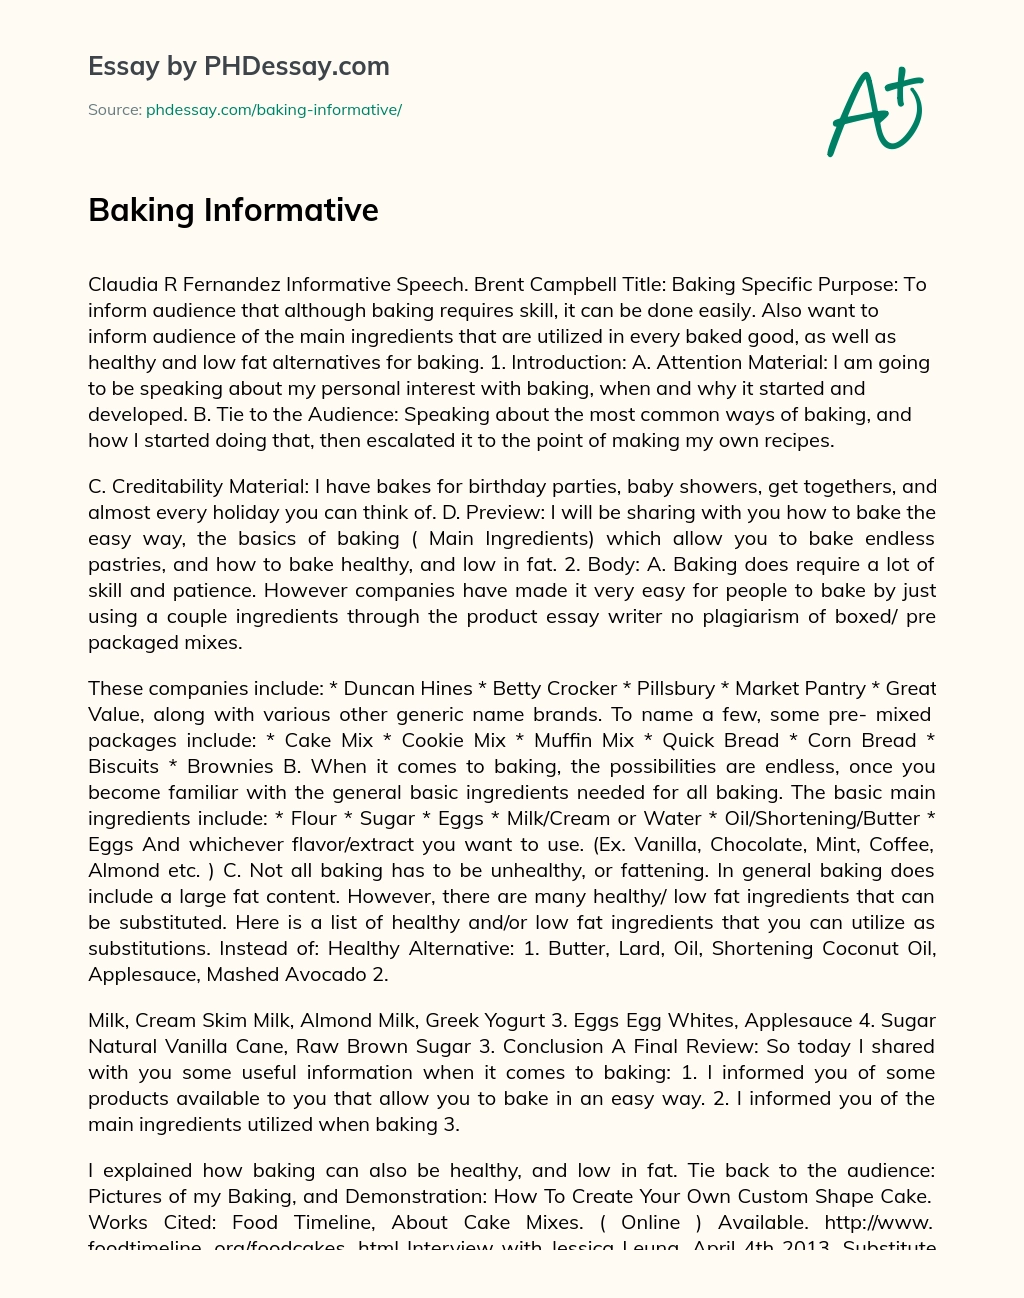 informative speech on baking